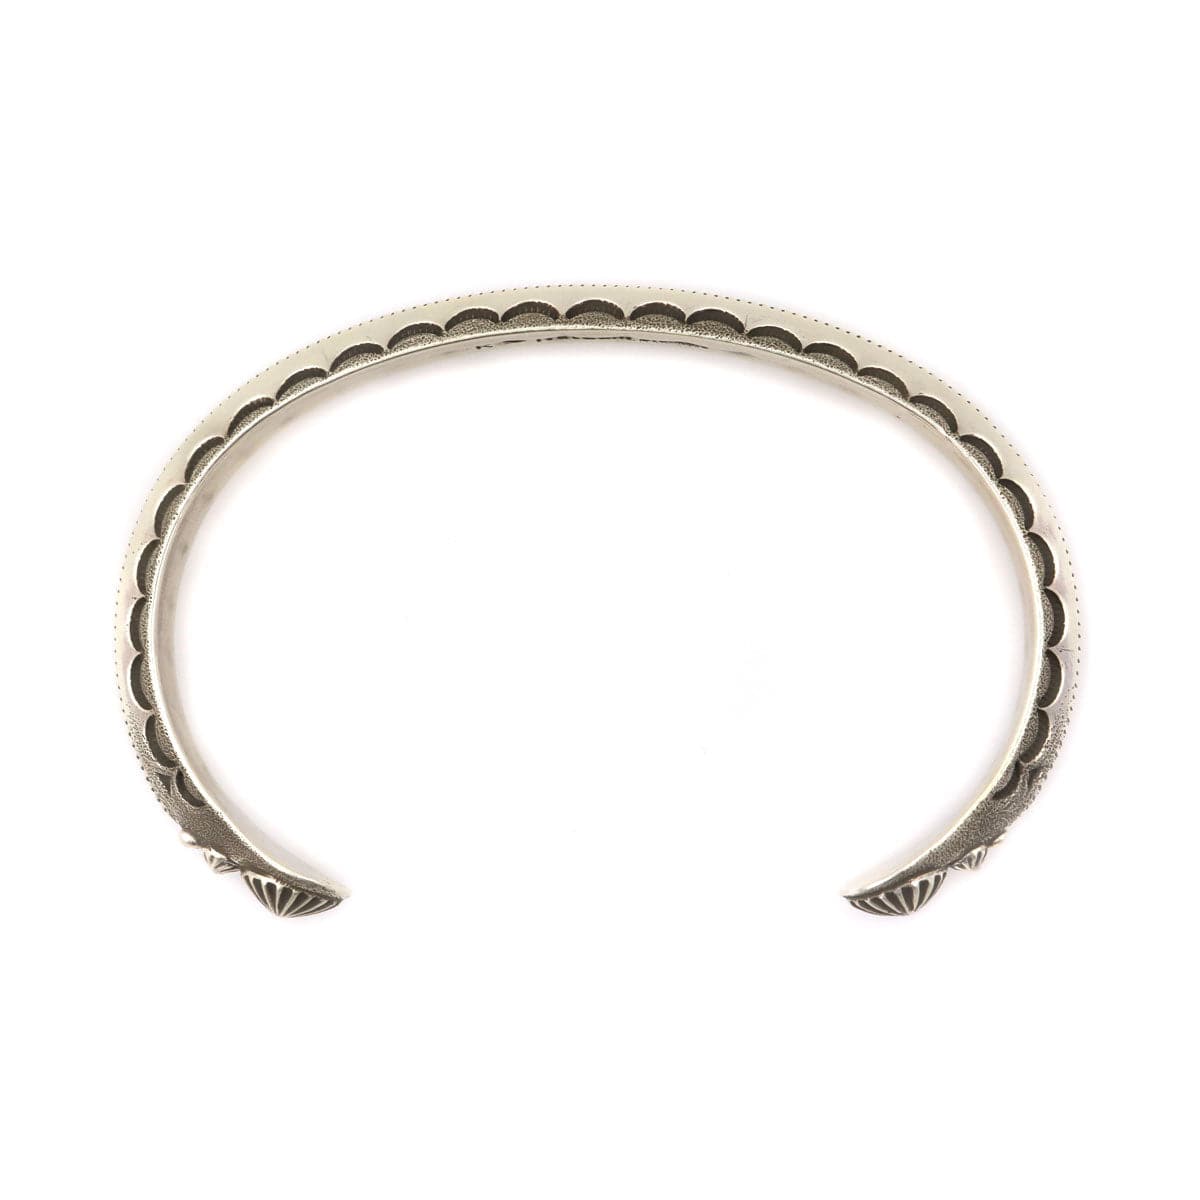 Kee (Karl) Nataani â€“ Navajo Sterling Silver Stamped Design Bracelet, Contemporary (J14184-007)4